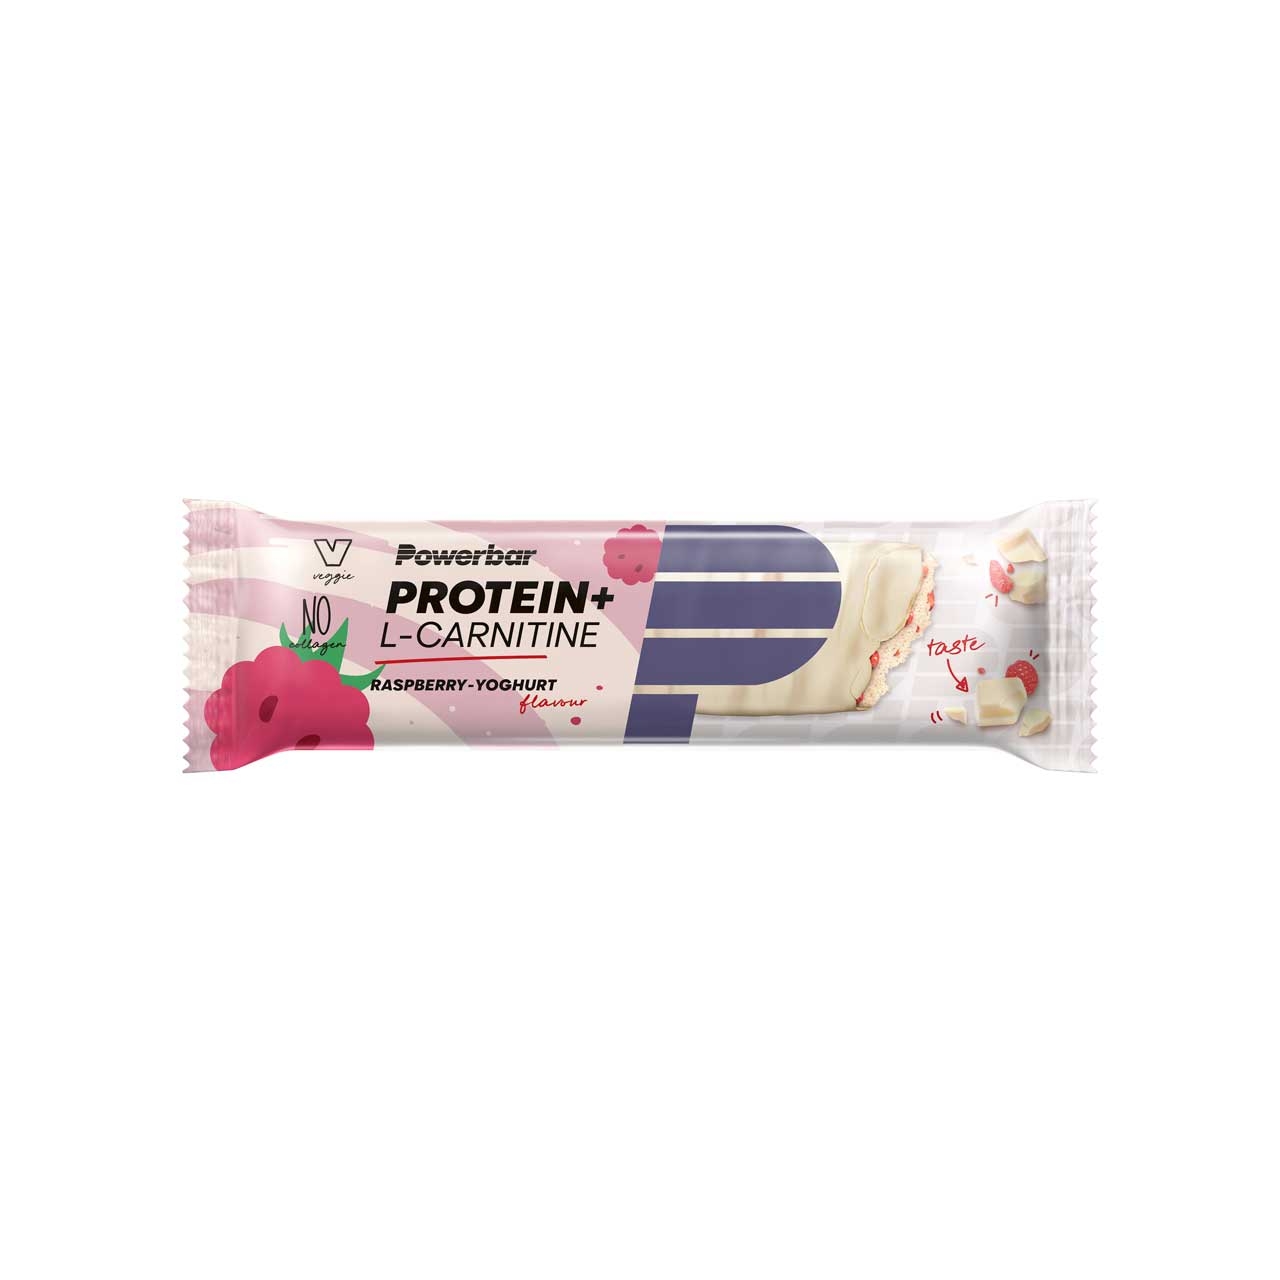 ProteinPlus + L-Carnitine Himbeer-Joghurt 1 (35g) Riegel